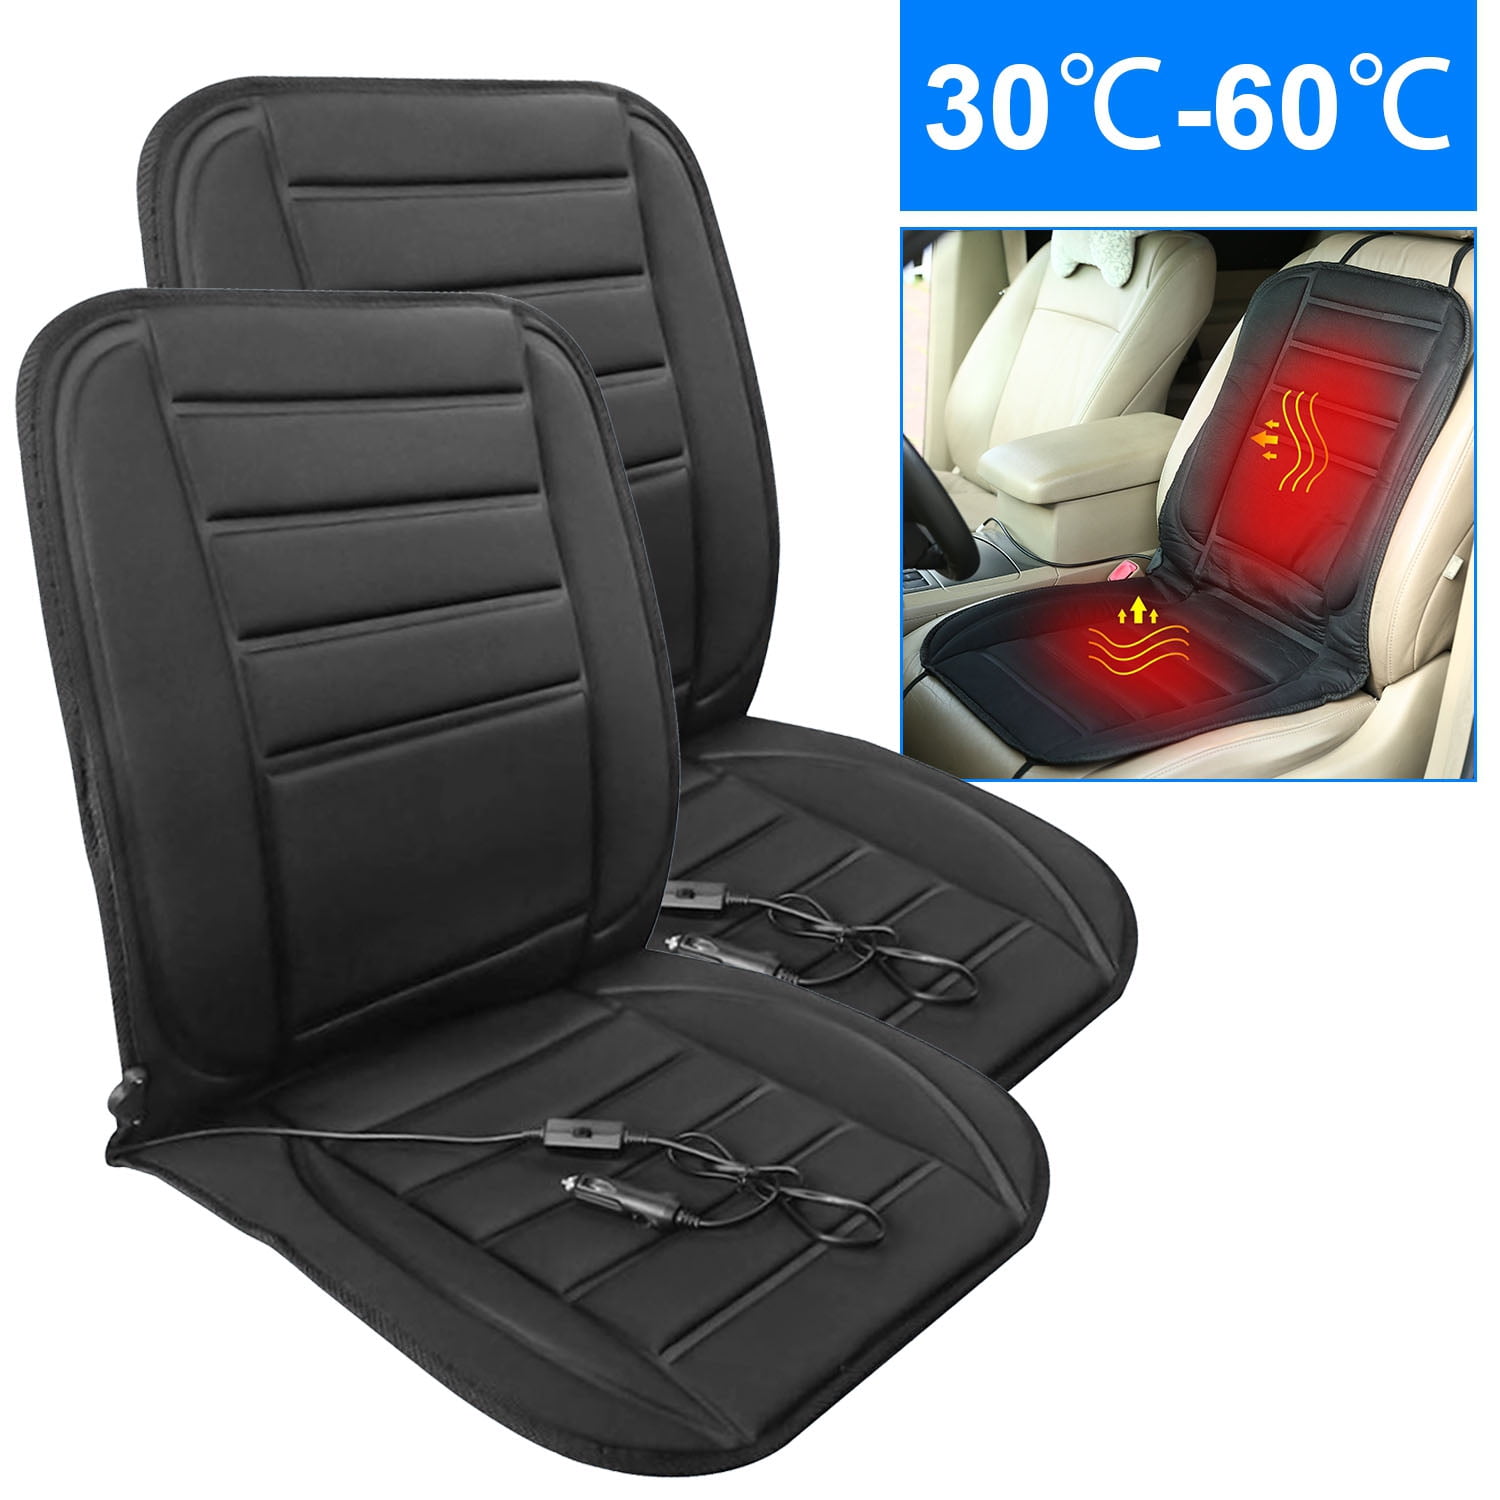 EQWLJWE Heated Car Seat Cushion Thin Seat Cushion for Car Truck Seat  Driver, 18x18 inches Clearance